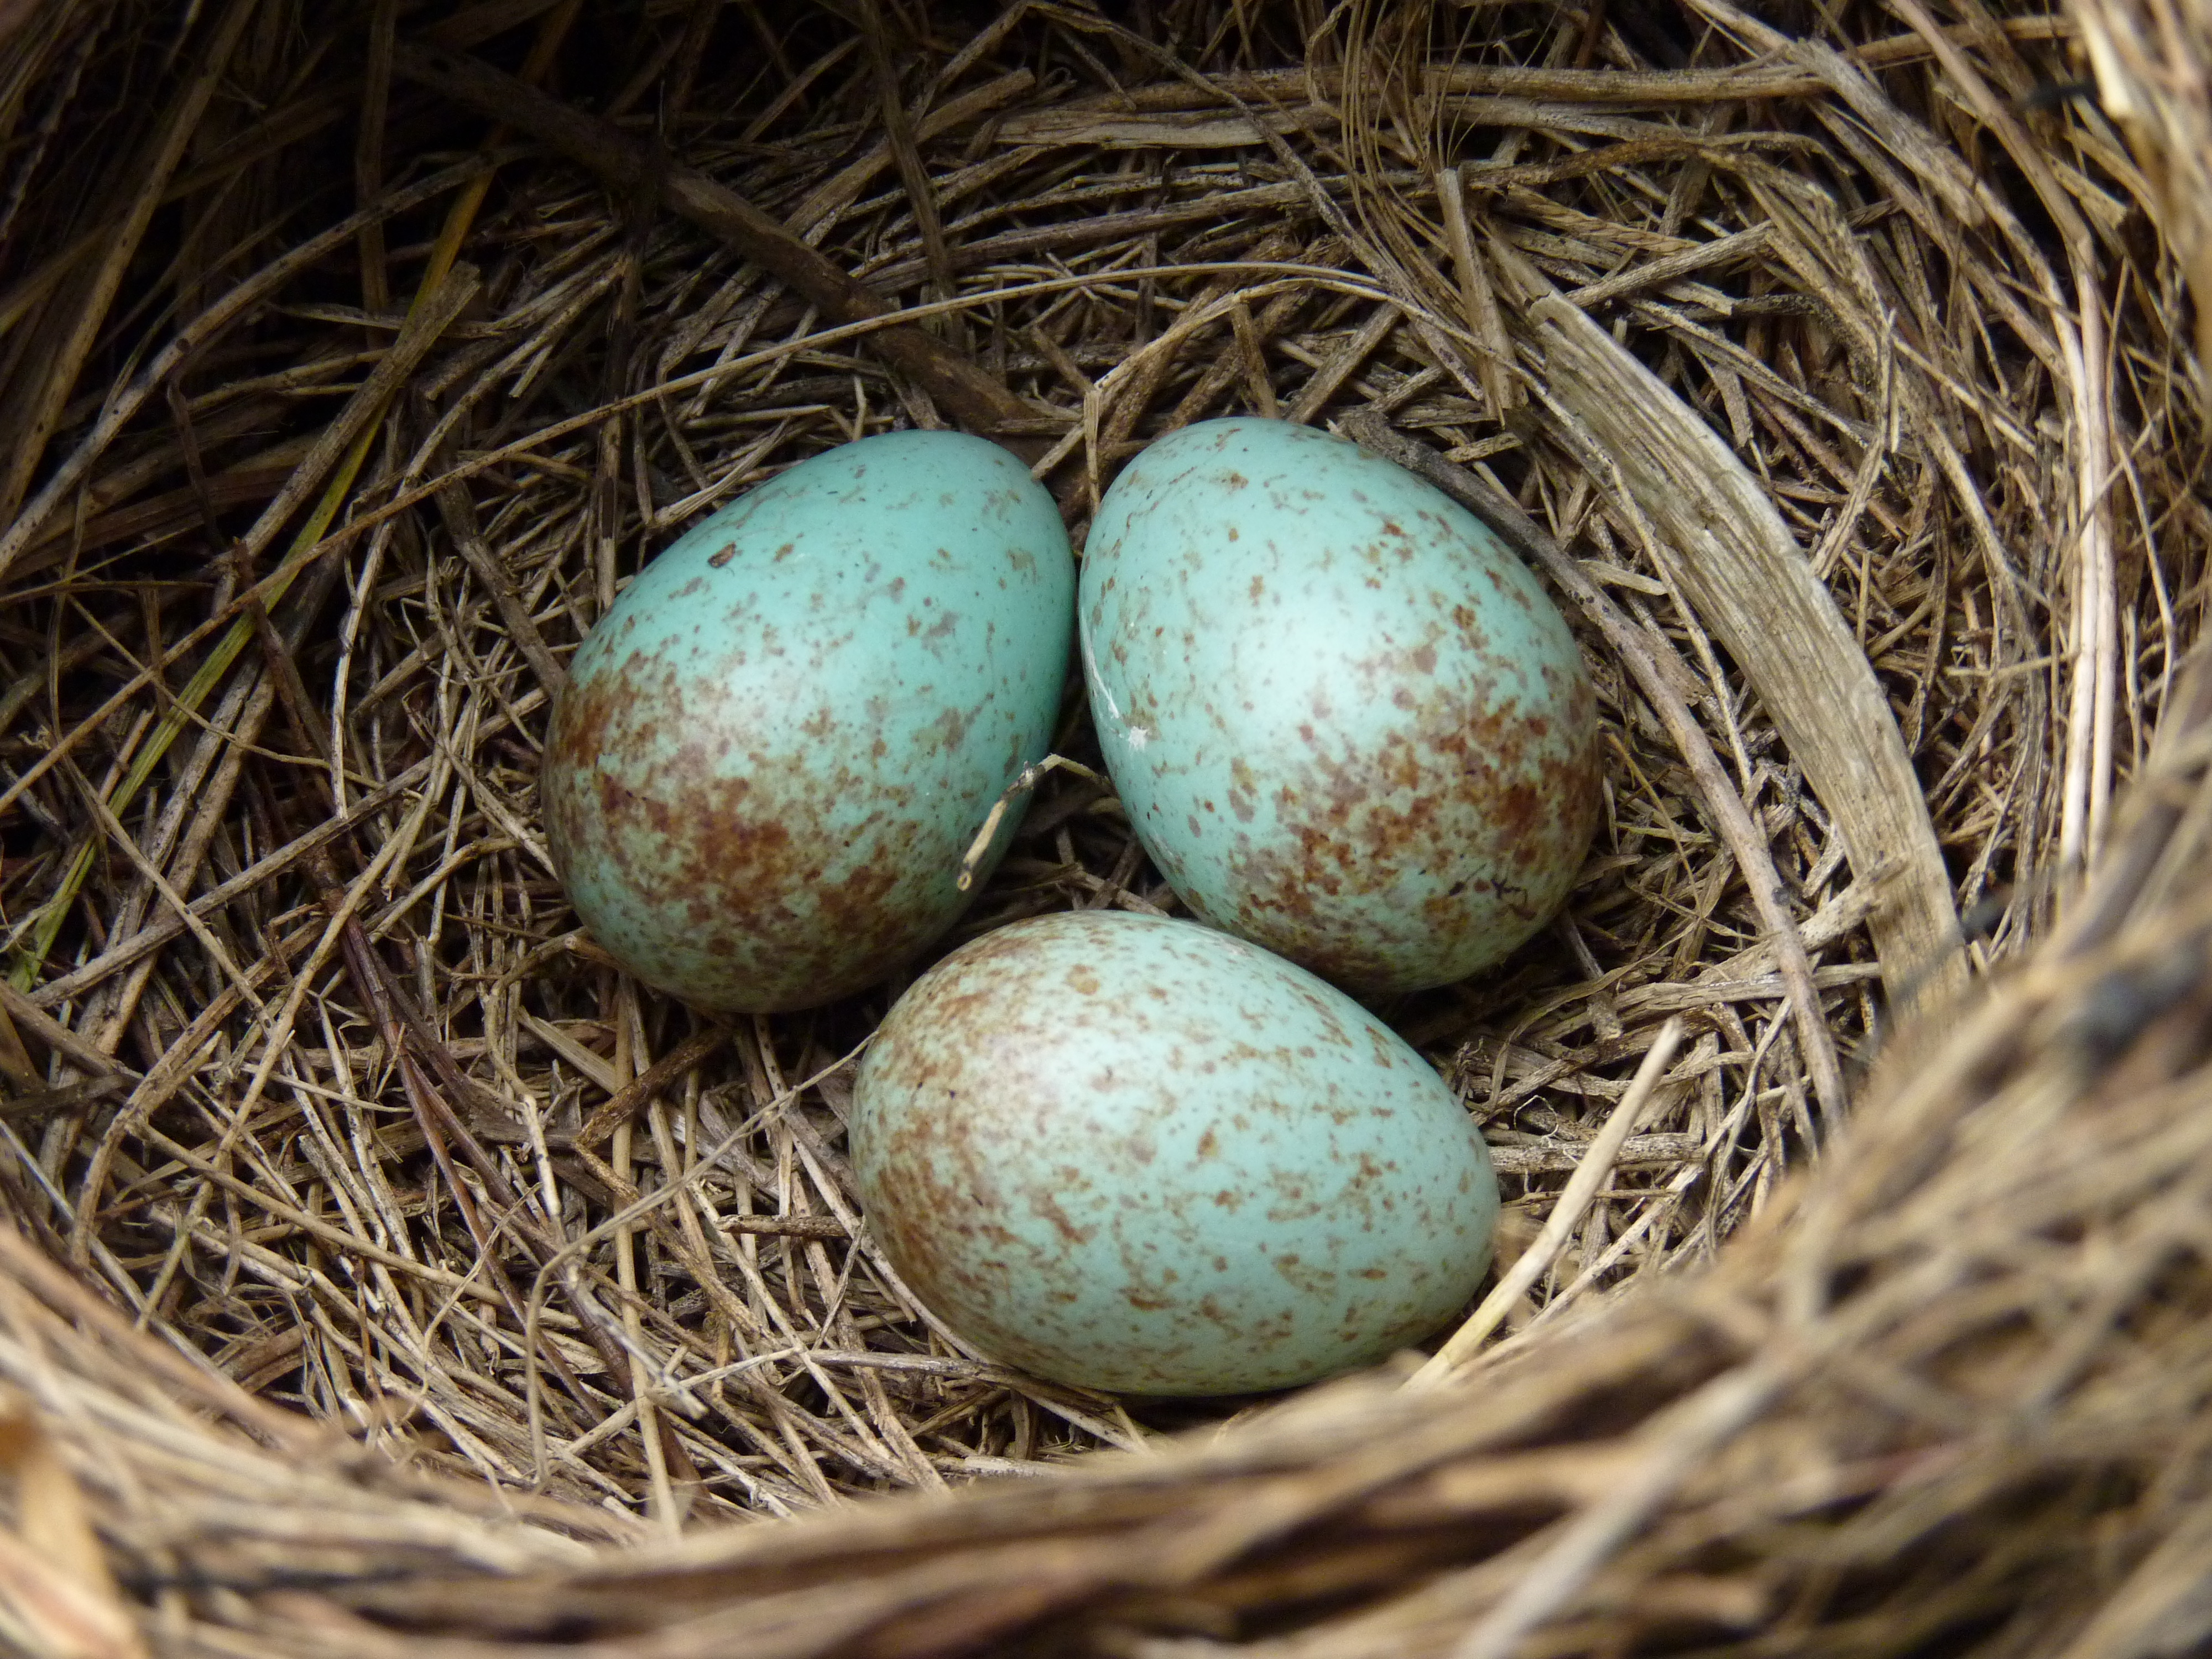 File:Blackbird nest with 4 eggs.jpg - Wikimedia Commons